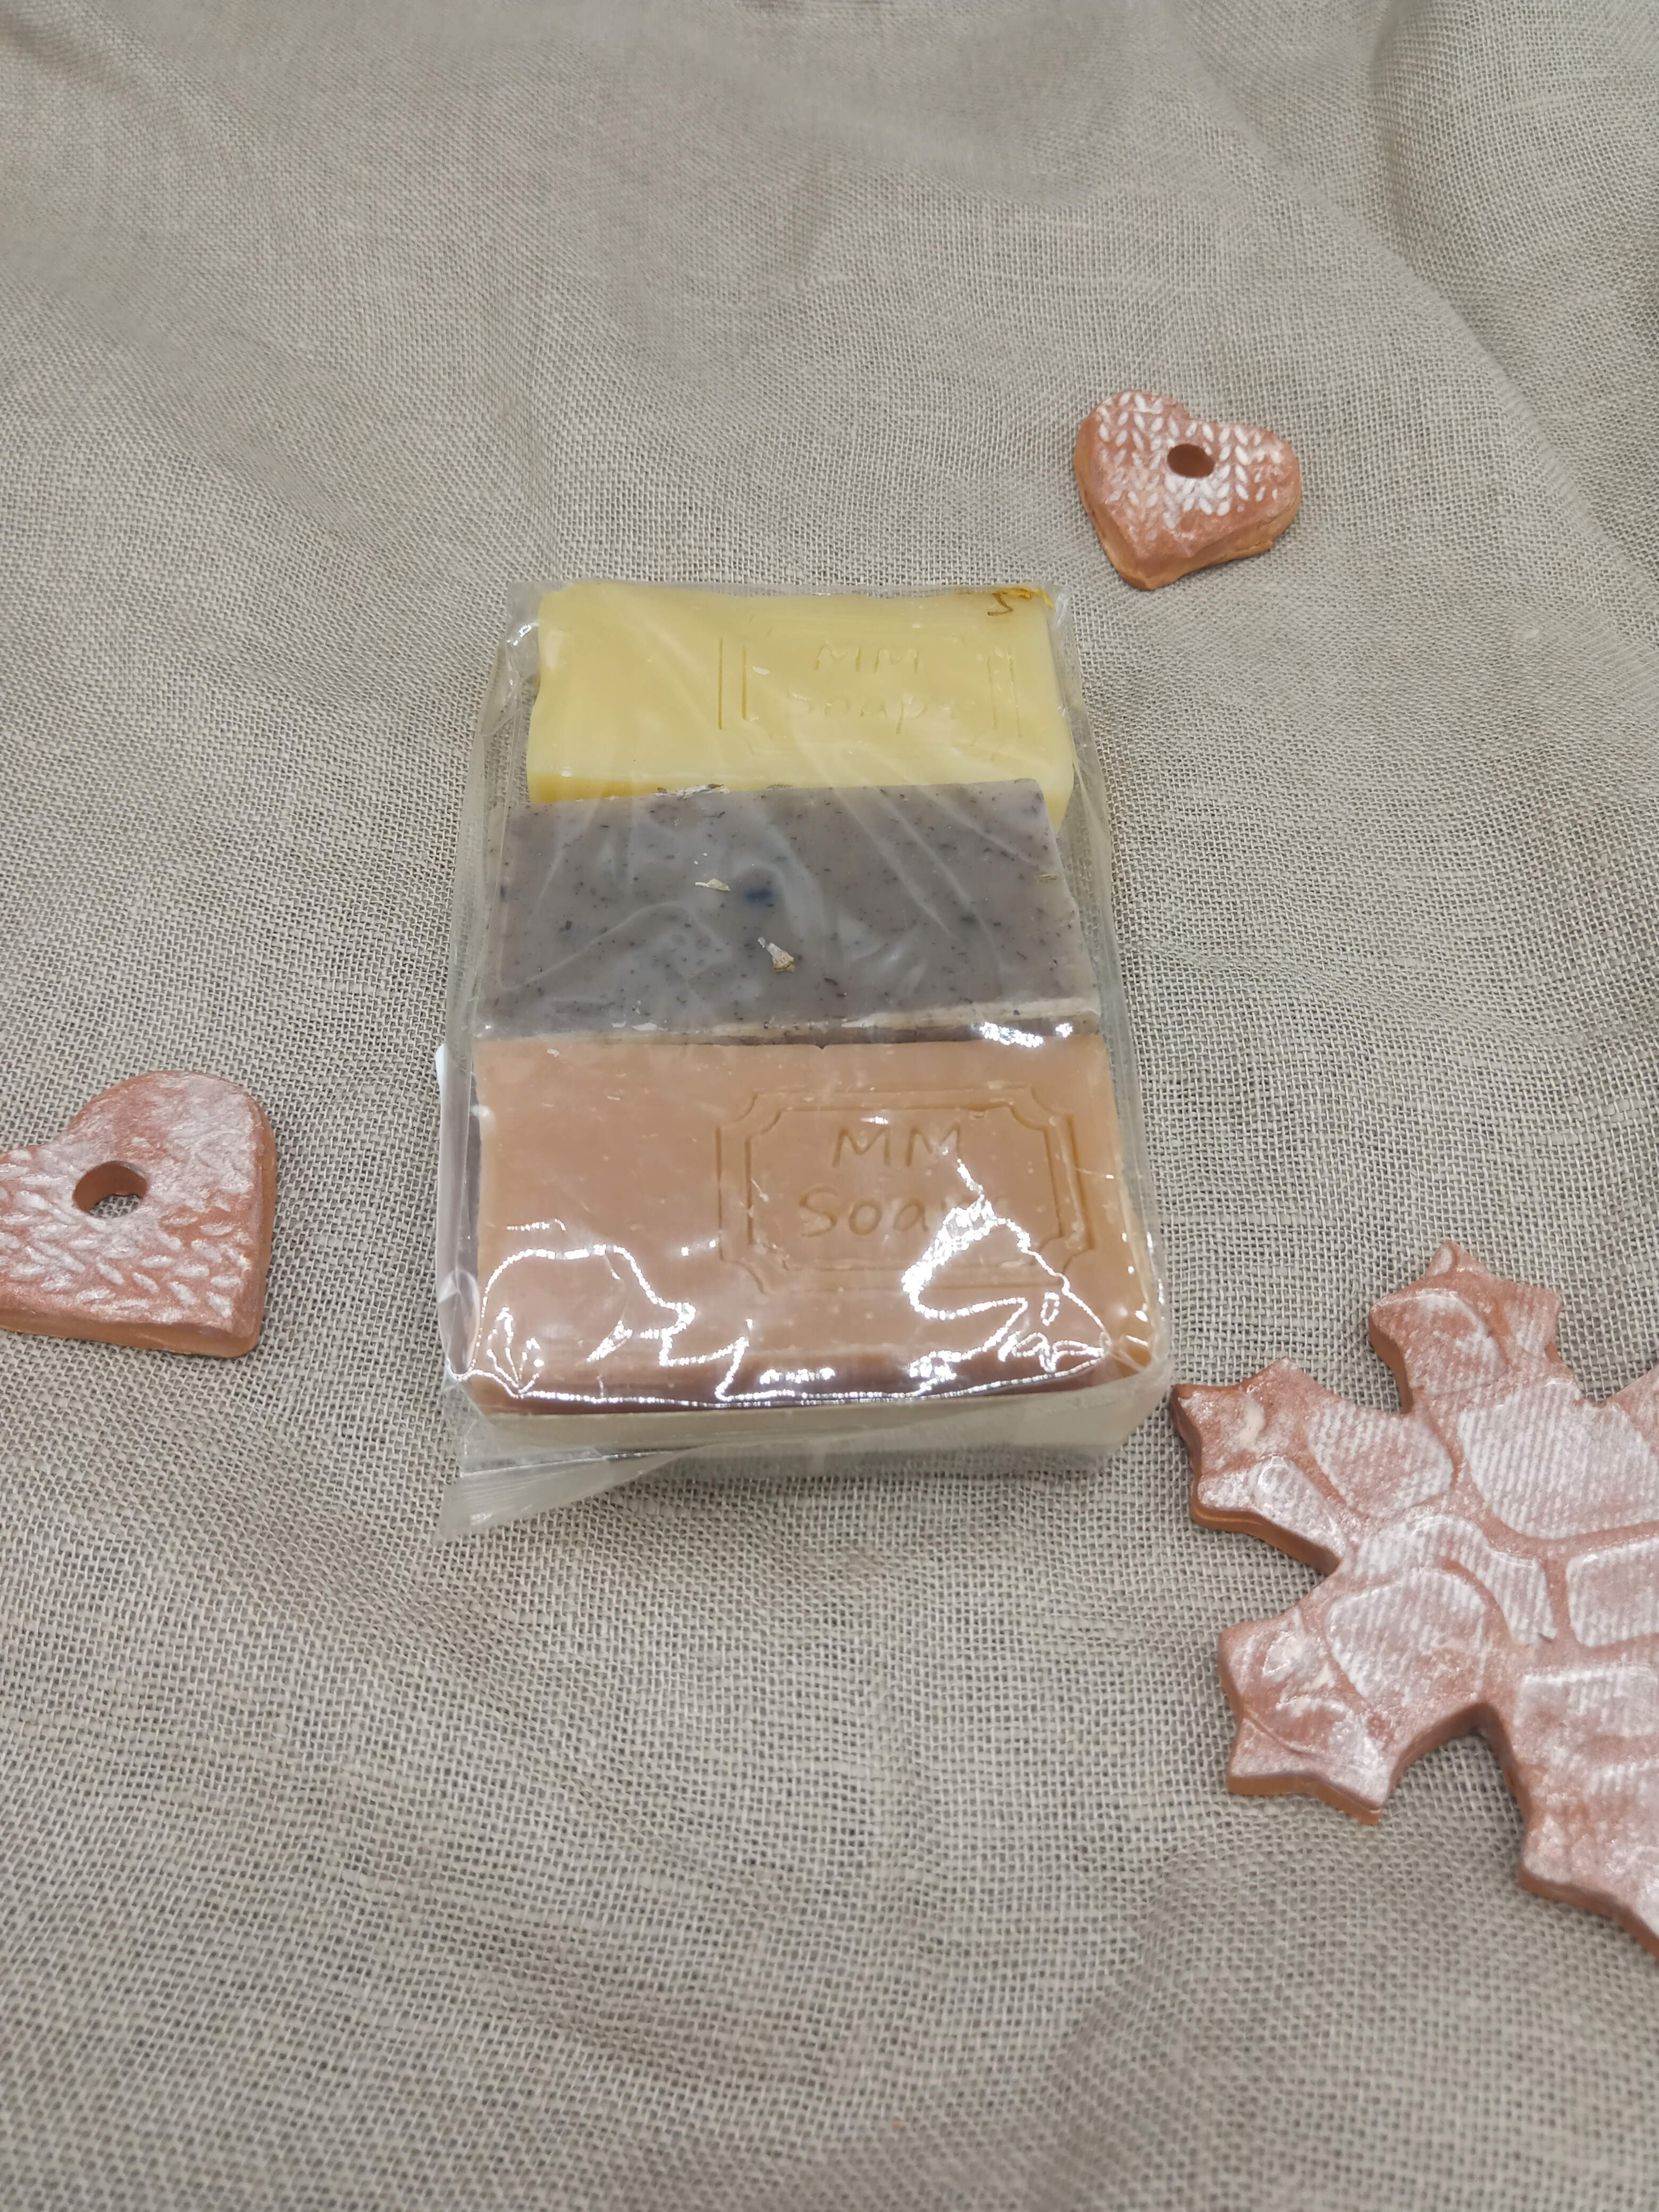 Triple Soap Gift Set